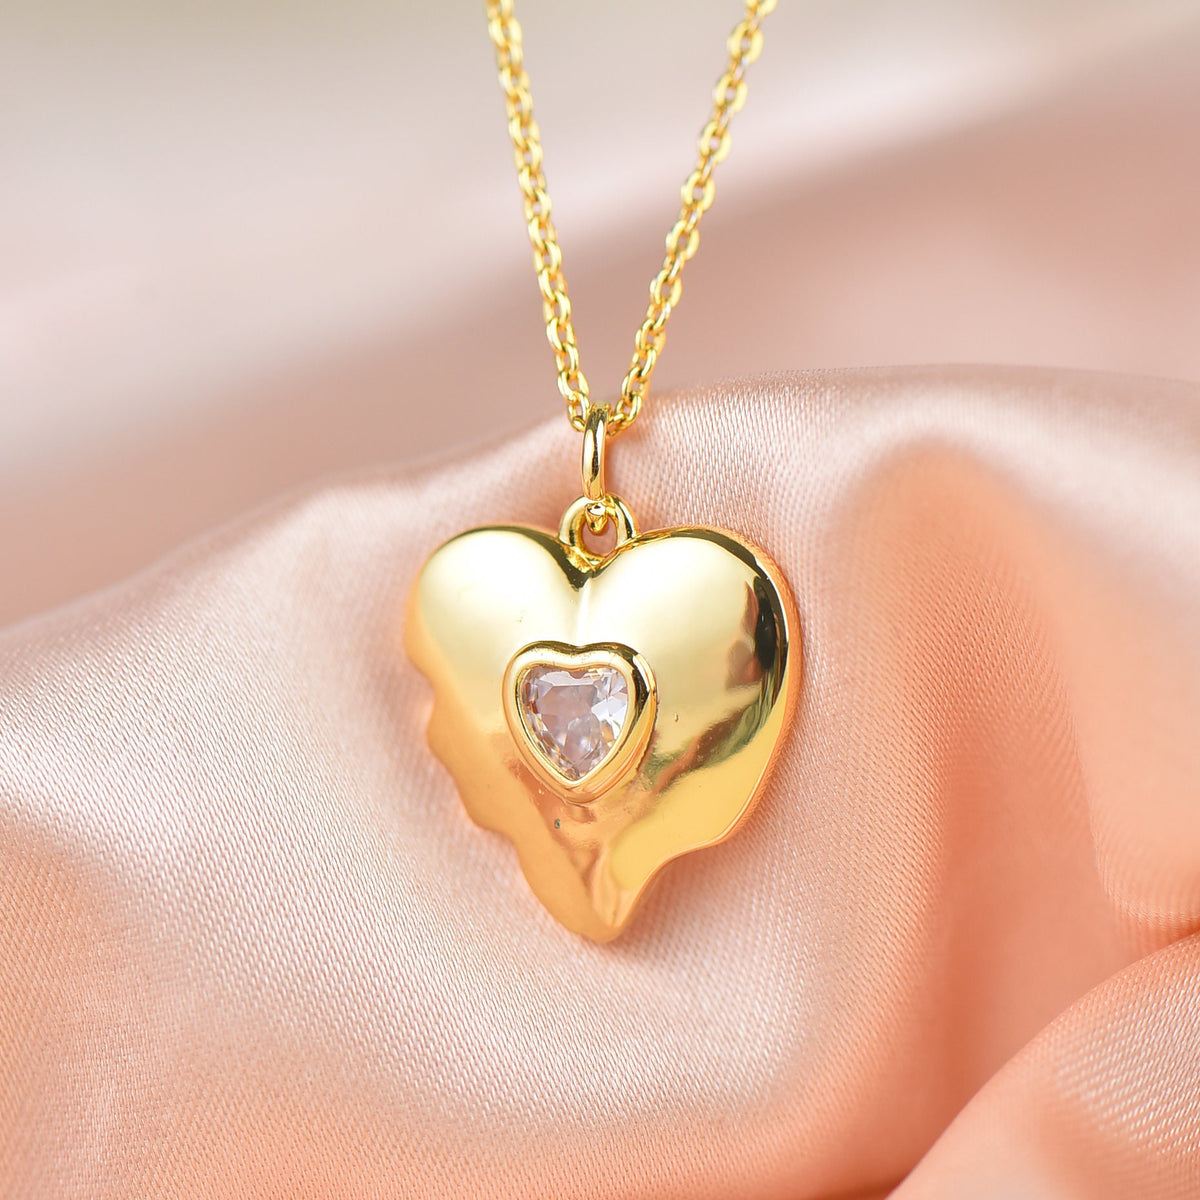 Gold Heart Charm Bezel Set With Heart Shape CZ In The Center,High Polished Shiny Bezel Heart Charm MP16-111